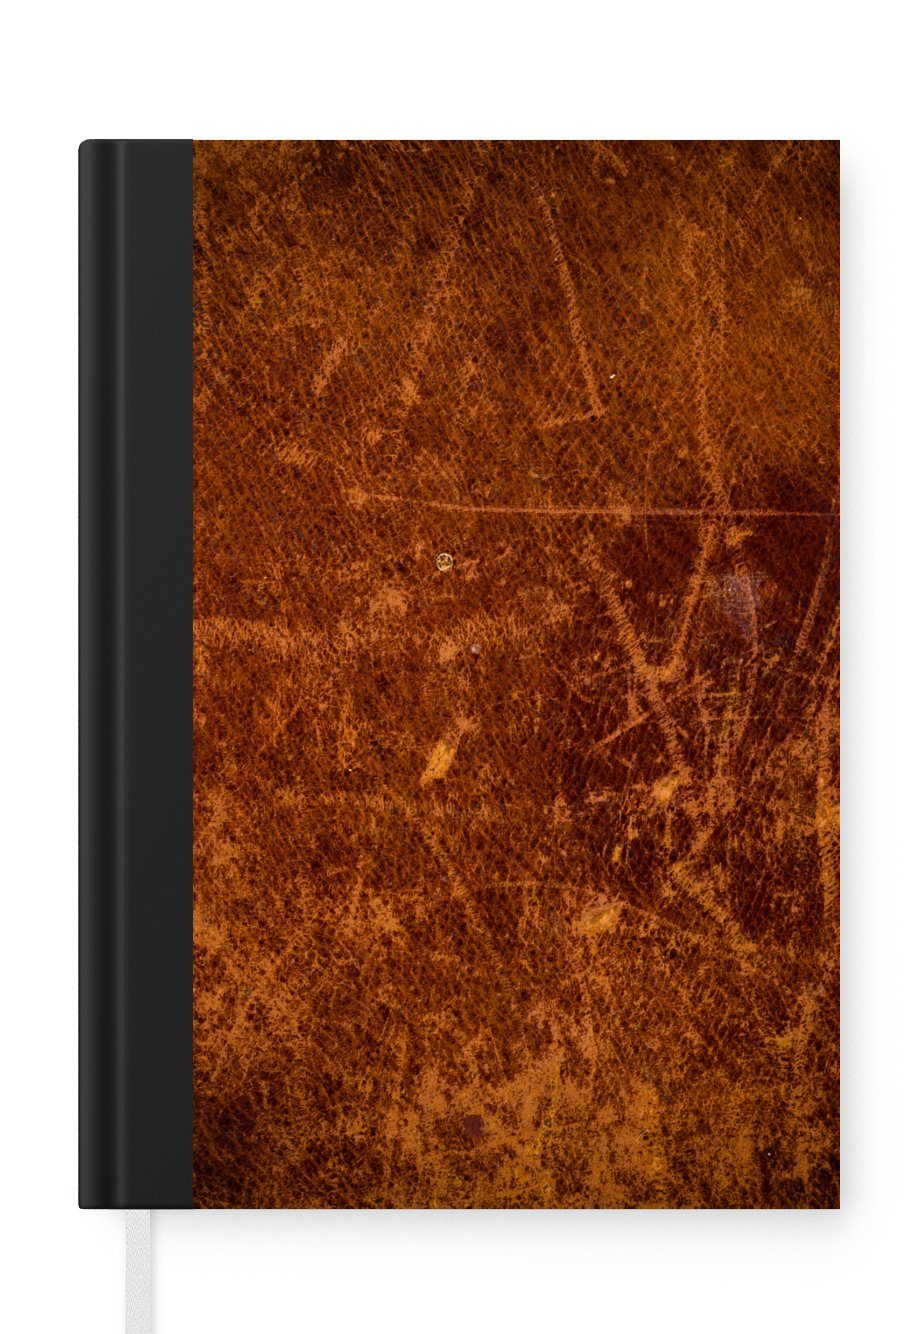 MuchoWow Notizbuch Leder - Lederoptik - Braun - Orange, Journal, Merkzettel, Tagebuch, Notizheft, A5, 98 Seiten, Haushaltsbuch